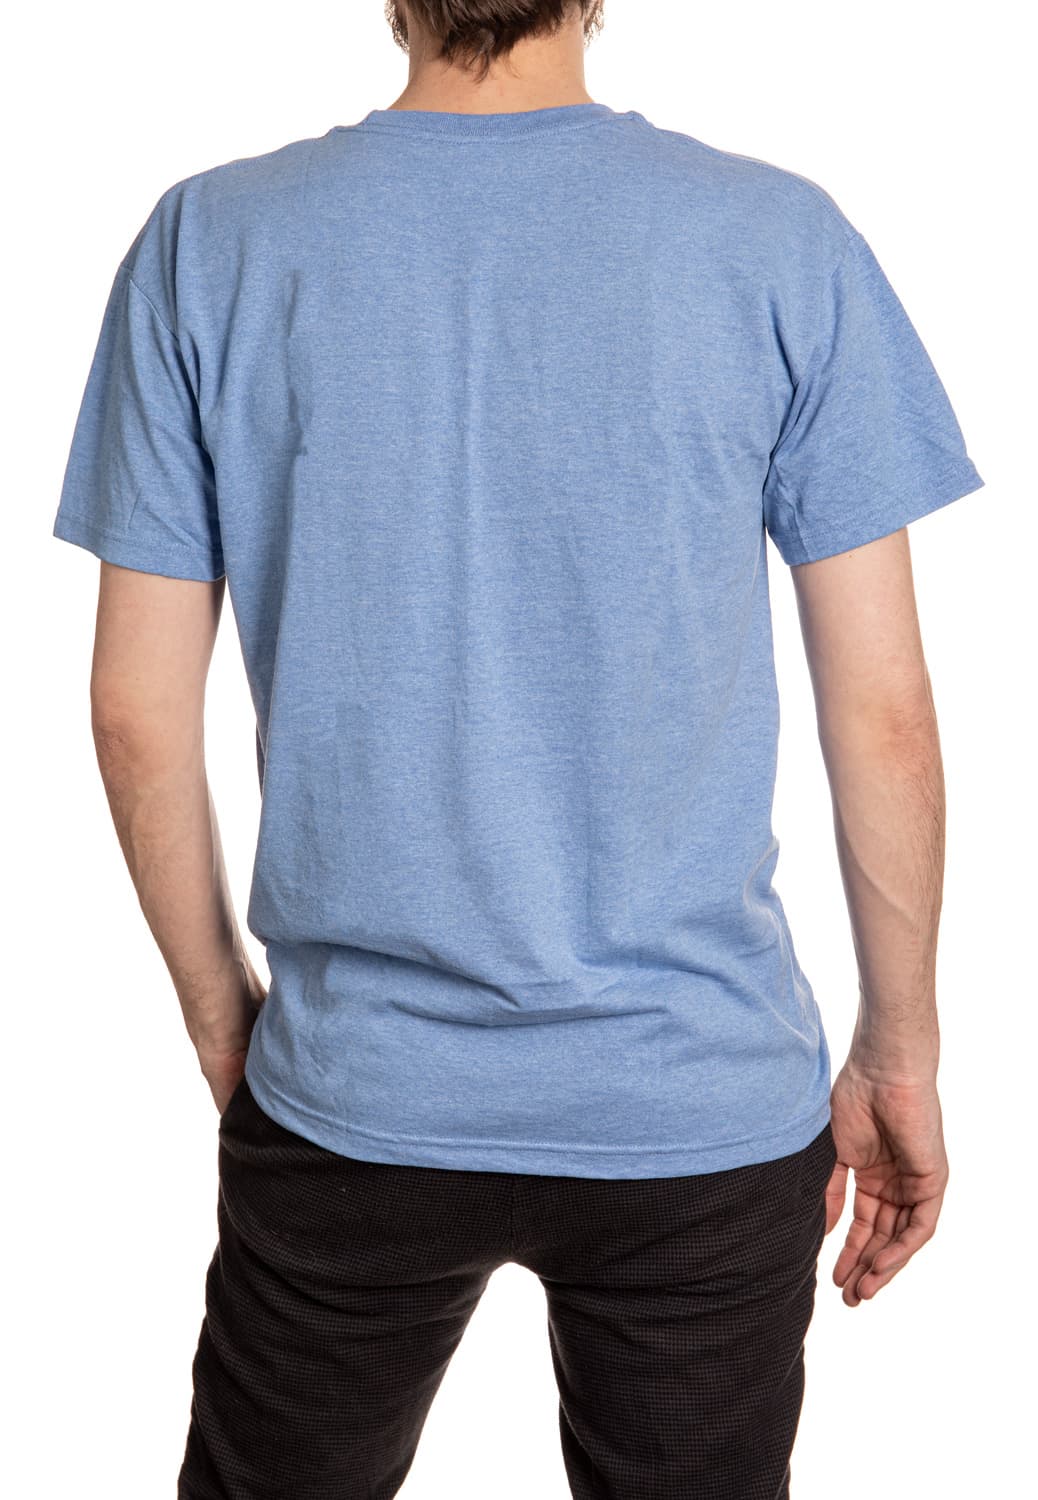 Millet Lite Classic Logo T-Shirt on Blue, Back View. No Back Print